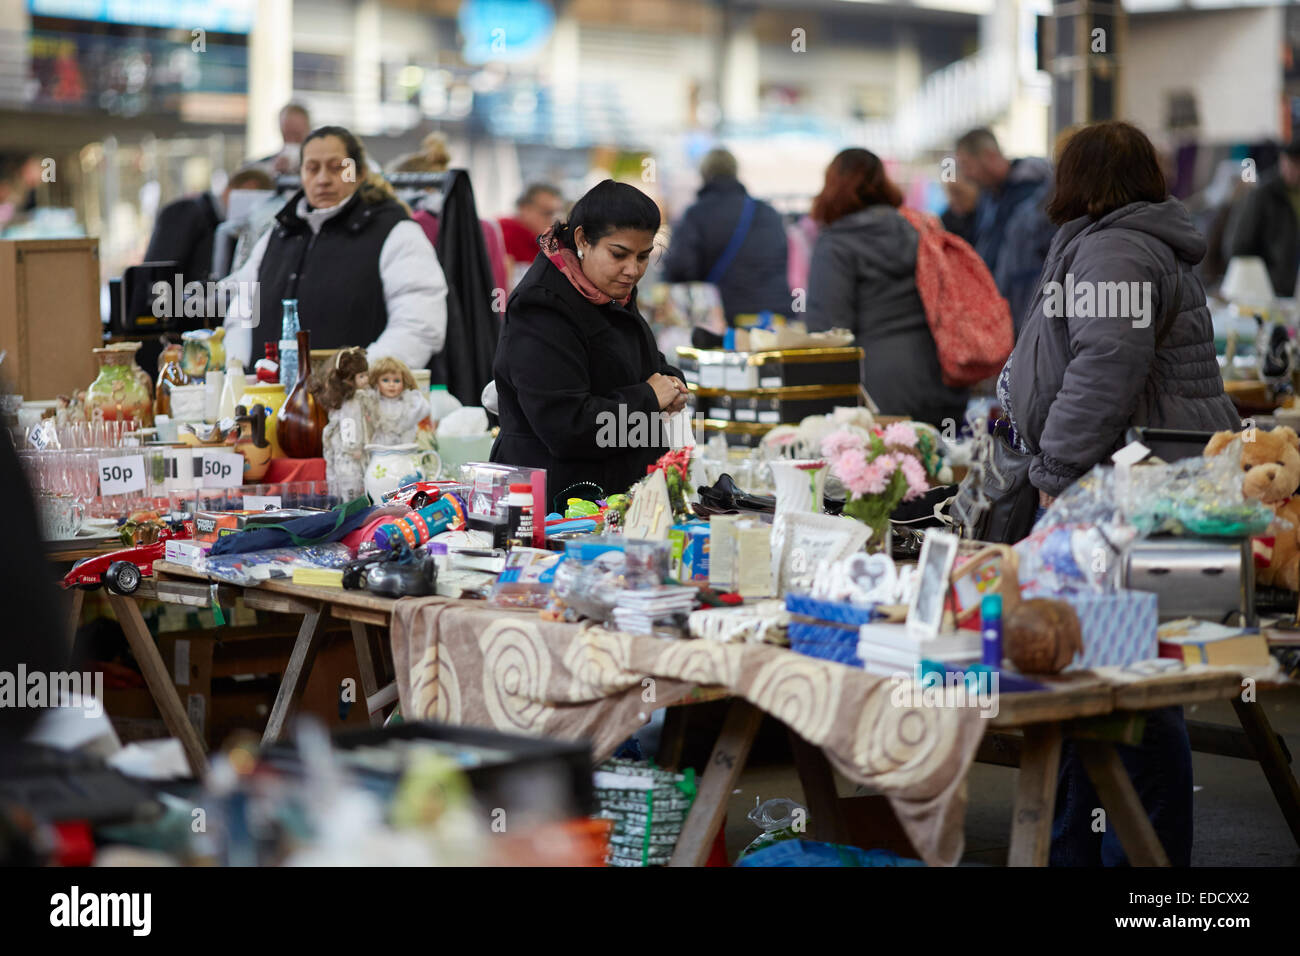 Preston Town Centre in Lancashire, flea market in the centre selling secondhand good on market stalls Stock Photo